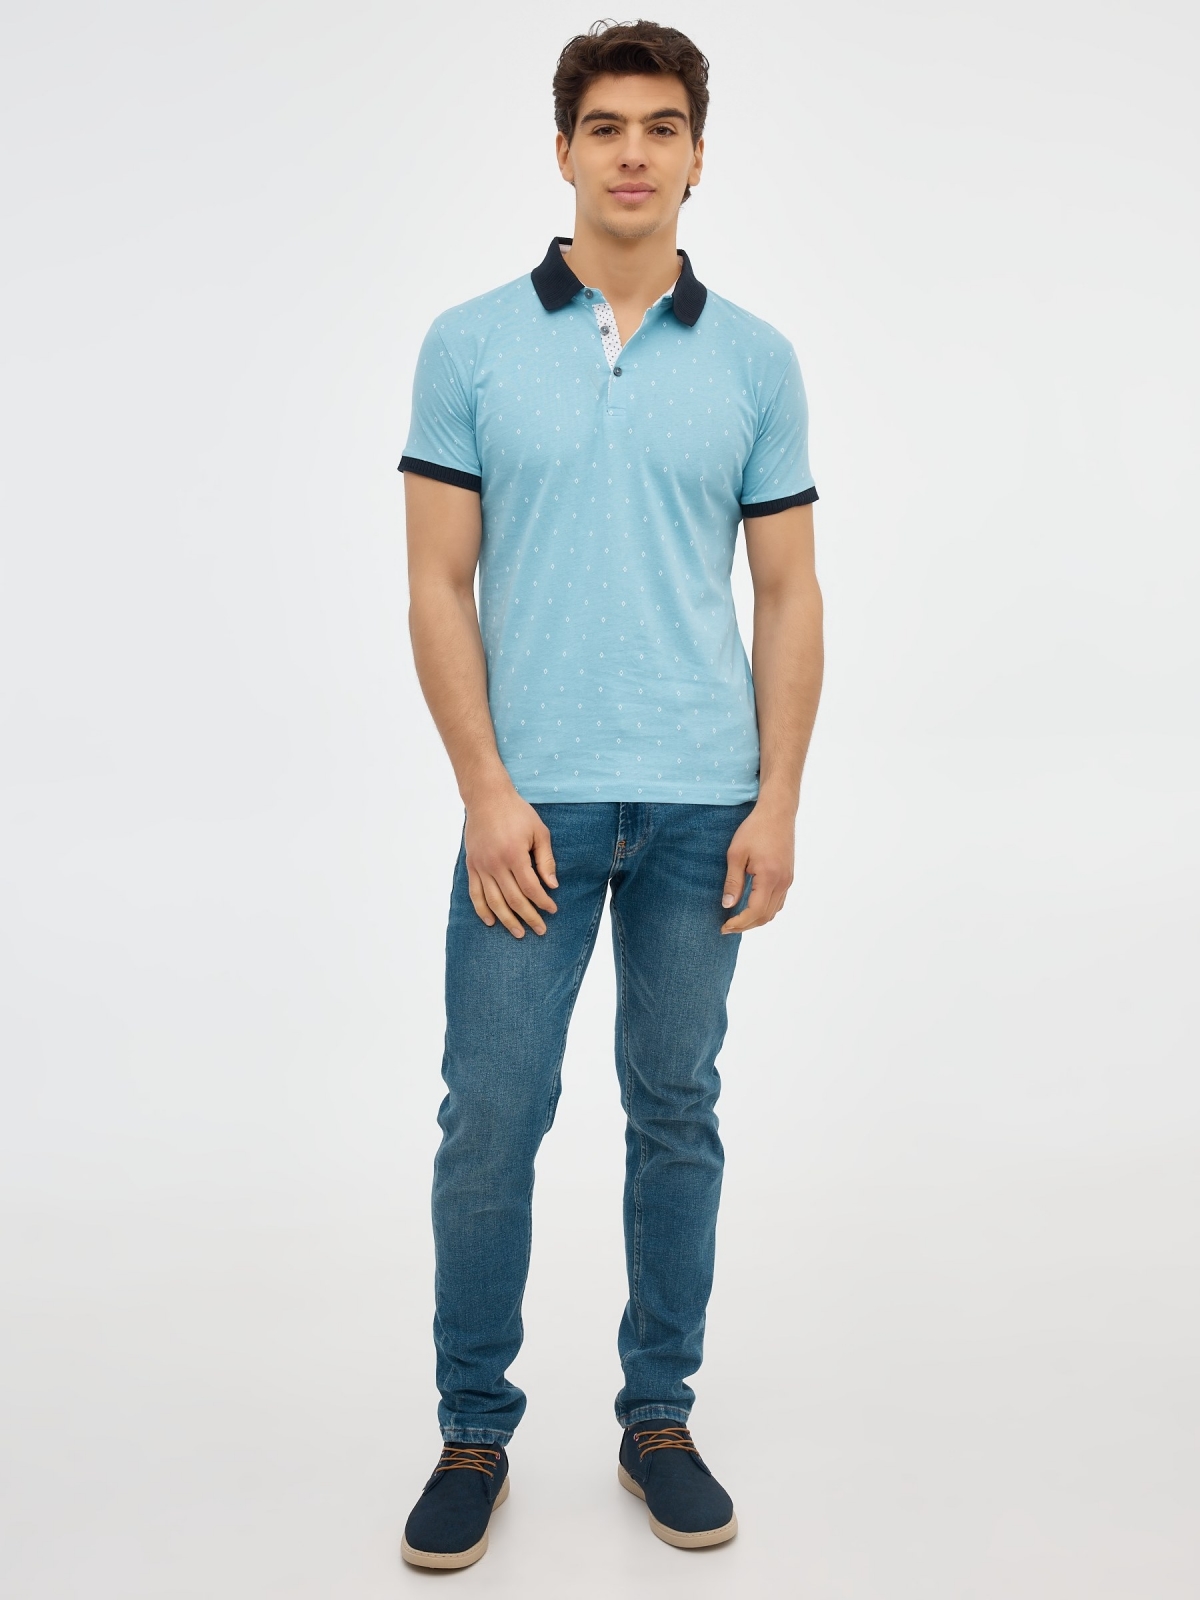 Mini print polo shirt light blue front view